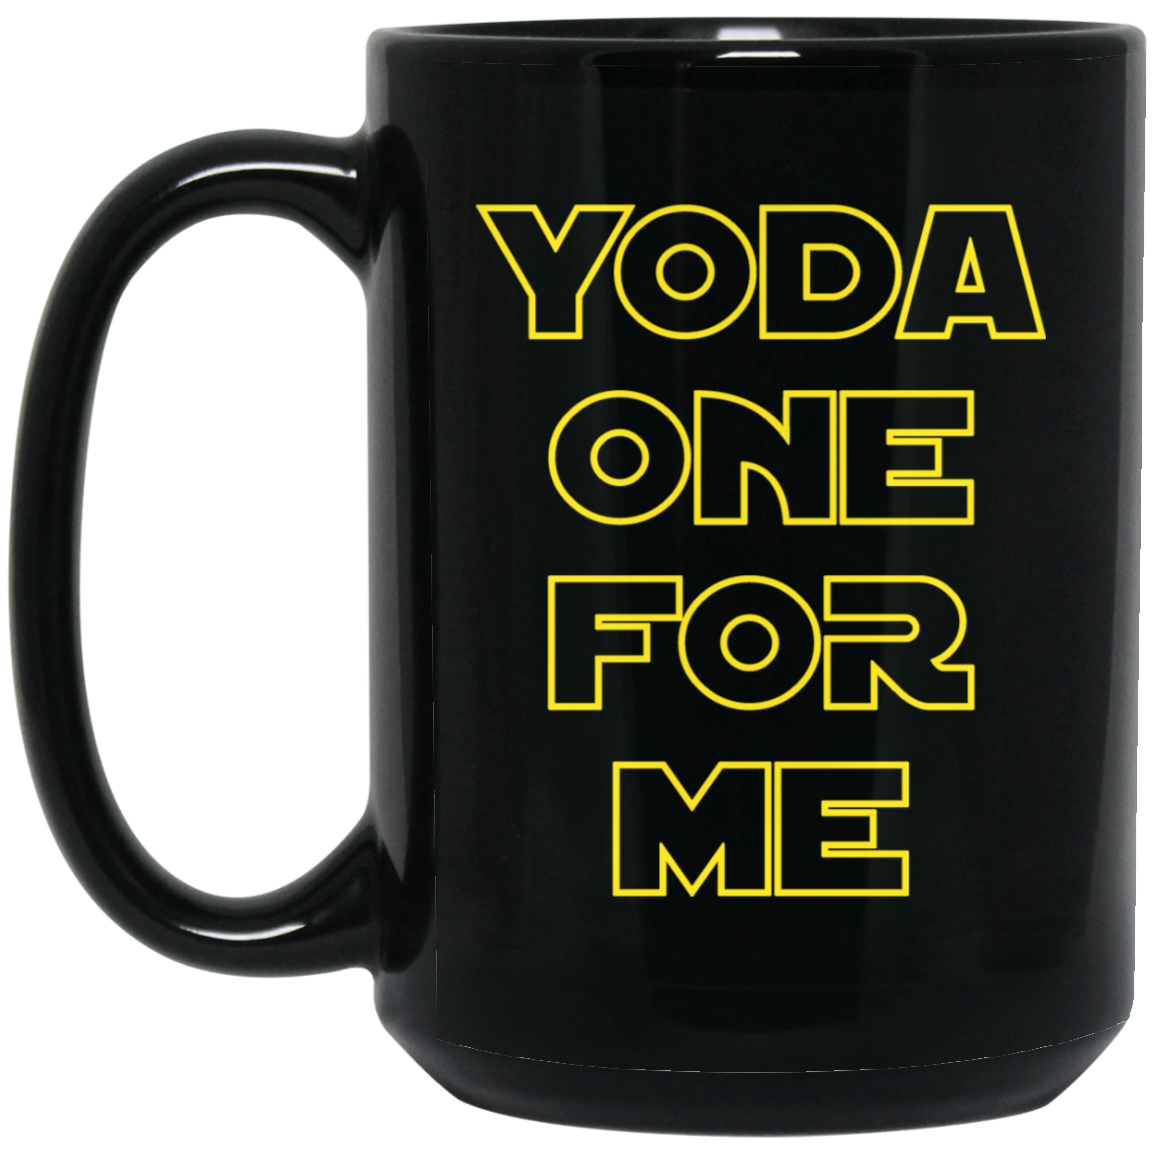 Yoda One For Me 15 oz. Schwarzer Becher